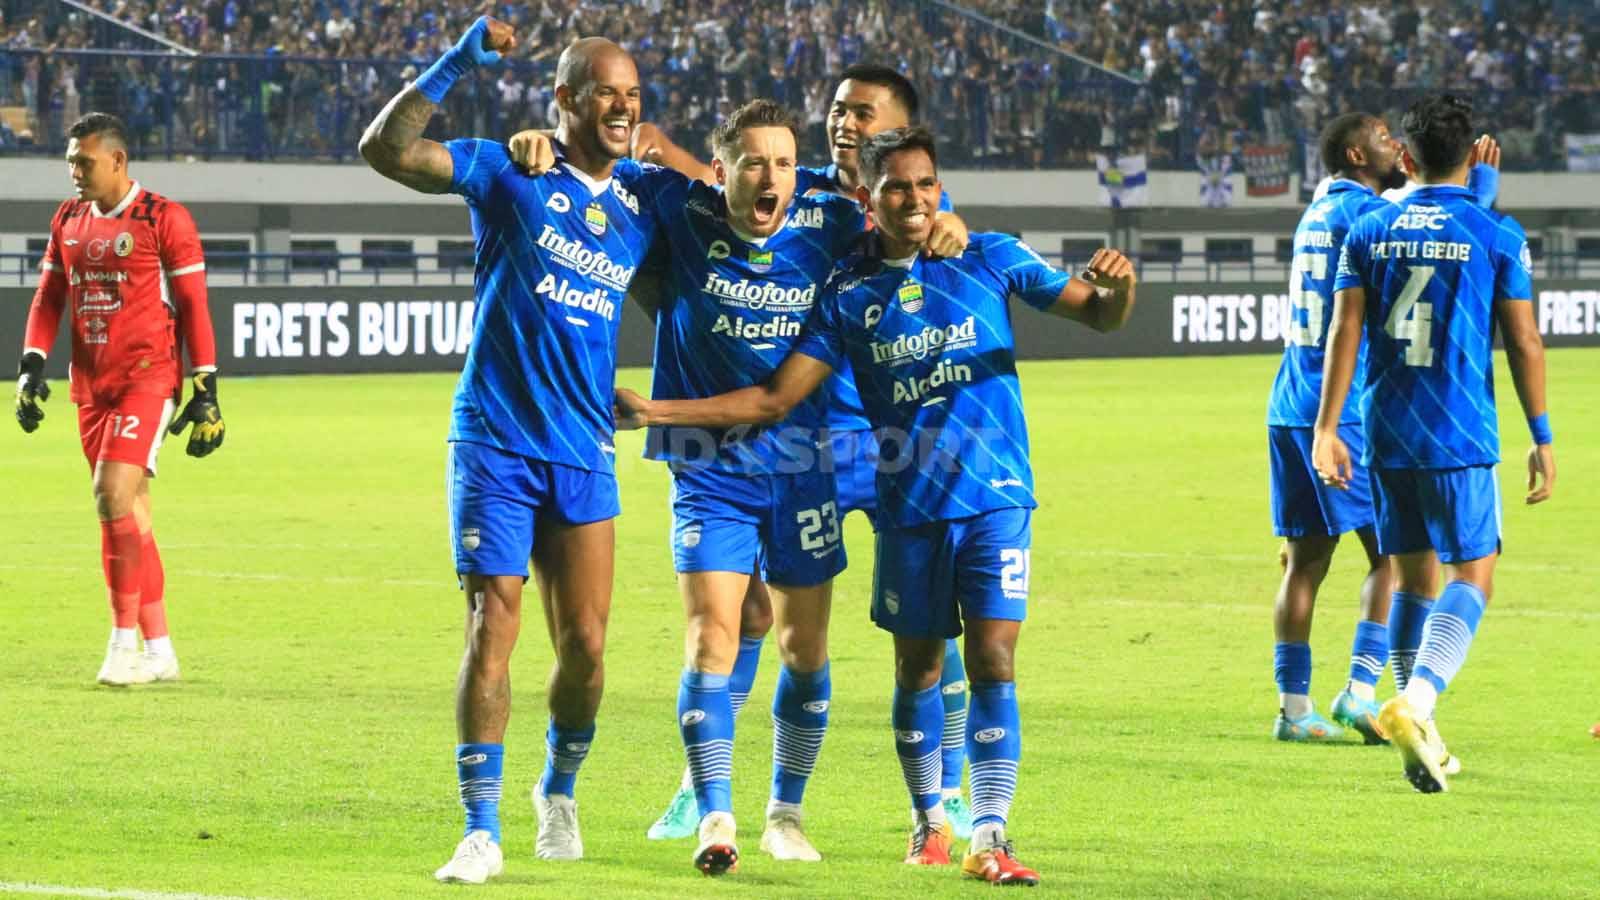 Winger Persib Bandung, Frets Butuan bersama rekan-rekannya merayakan golnya ke gawang PSS, pada pertandingan pekan ke-17 kompetisi Liga 1 2023-2024 di Stadion GBLA, Kota Bandung, Sabtu (28/10/23).